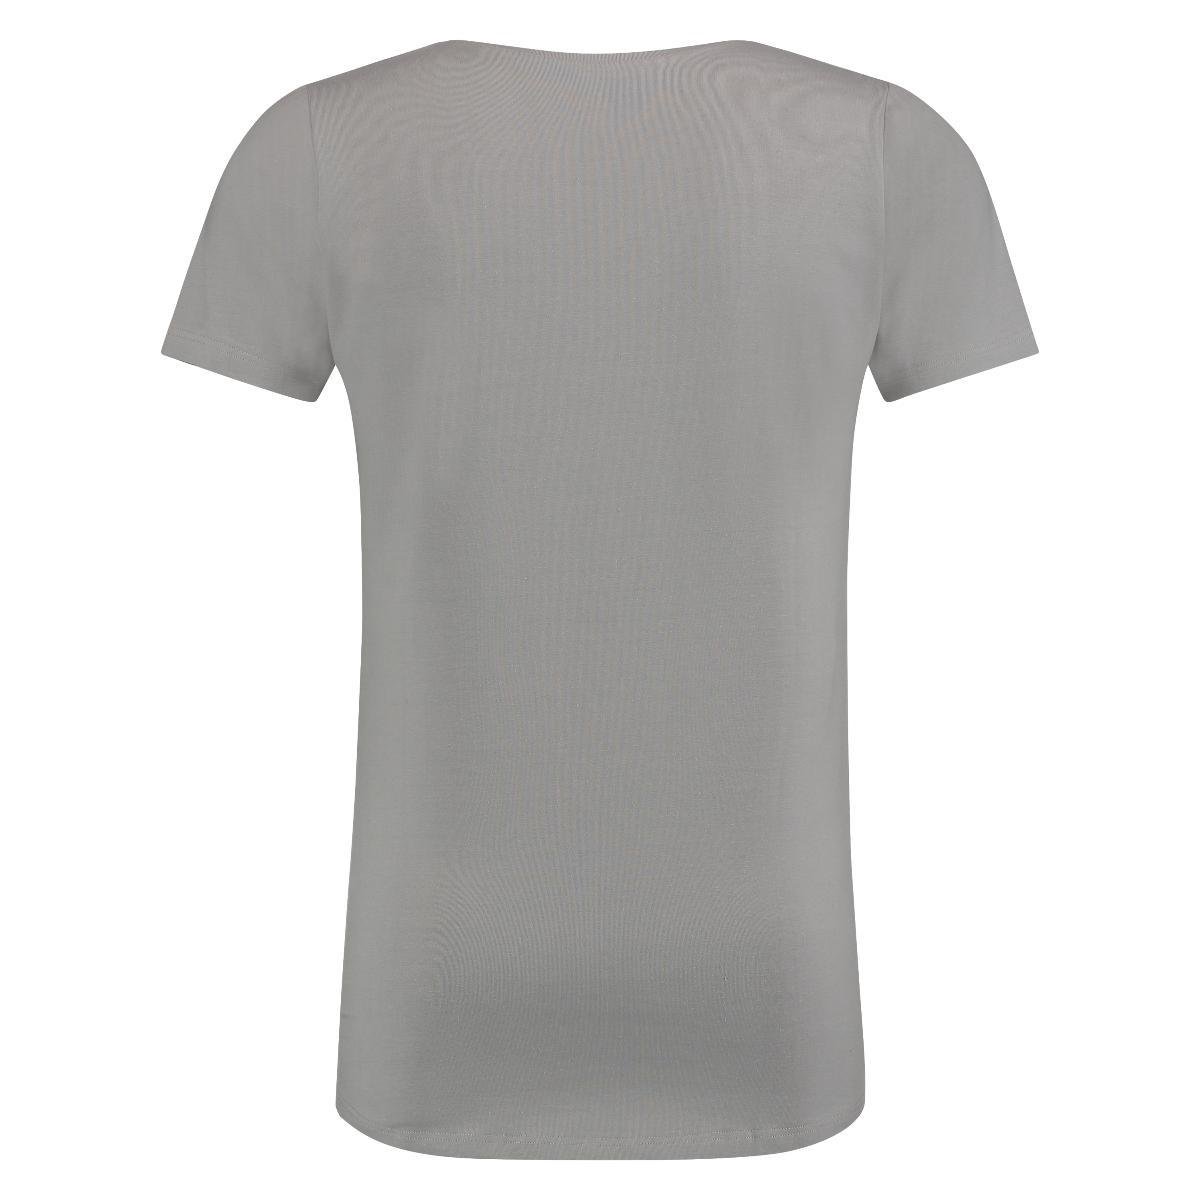 T-shirt Diepe V Hals Stretch Grijs 6-pack -XXL